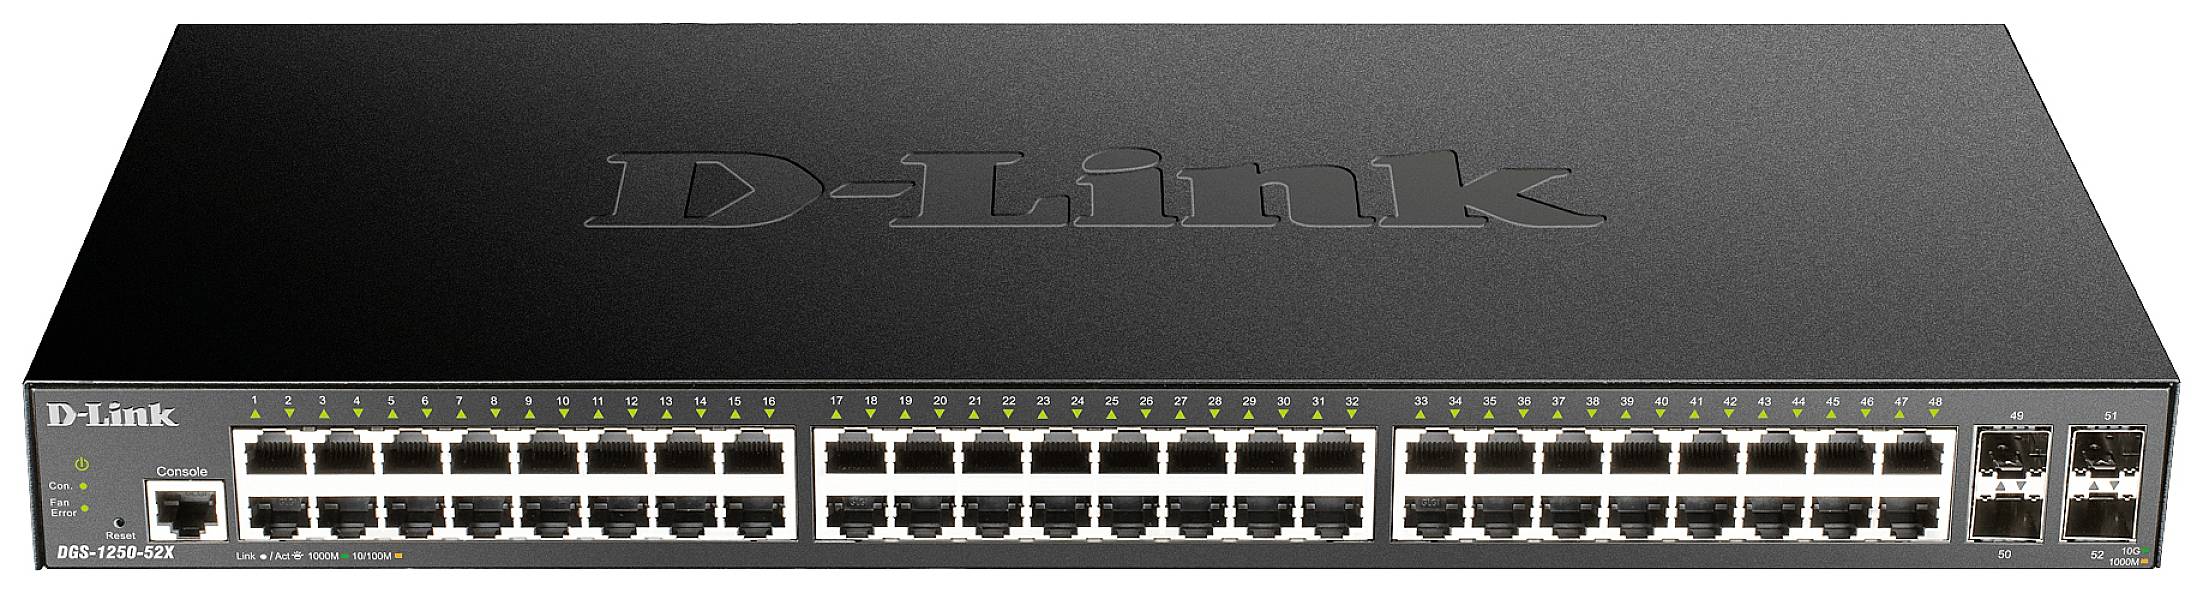 D-LINK Switch / 52-Port Smart Managed Gigabit Stack Switch 4x 10G, dlink green 3.0, 24x 10/100/1000M